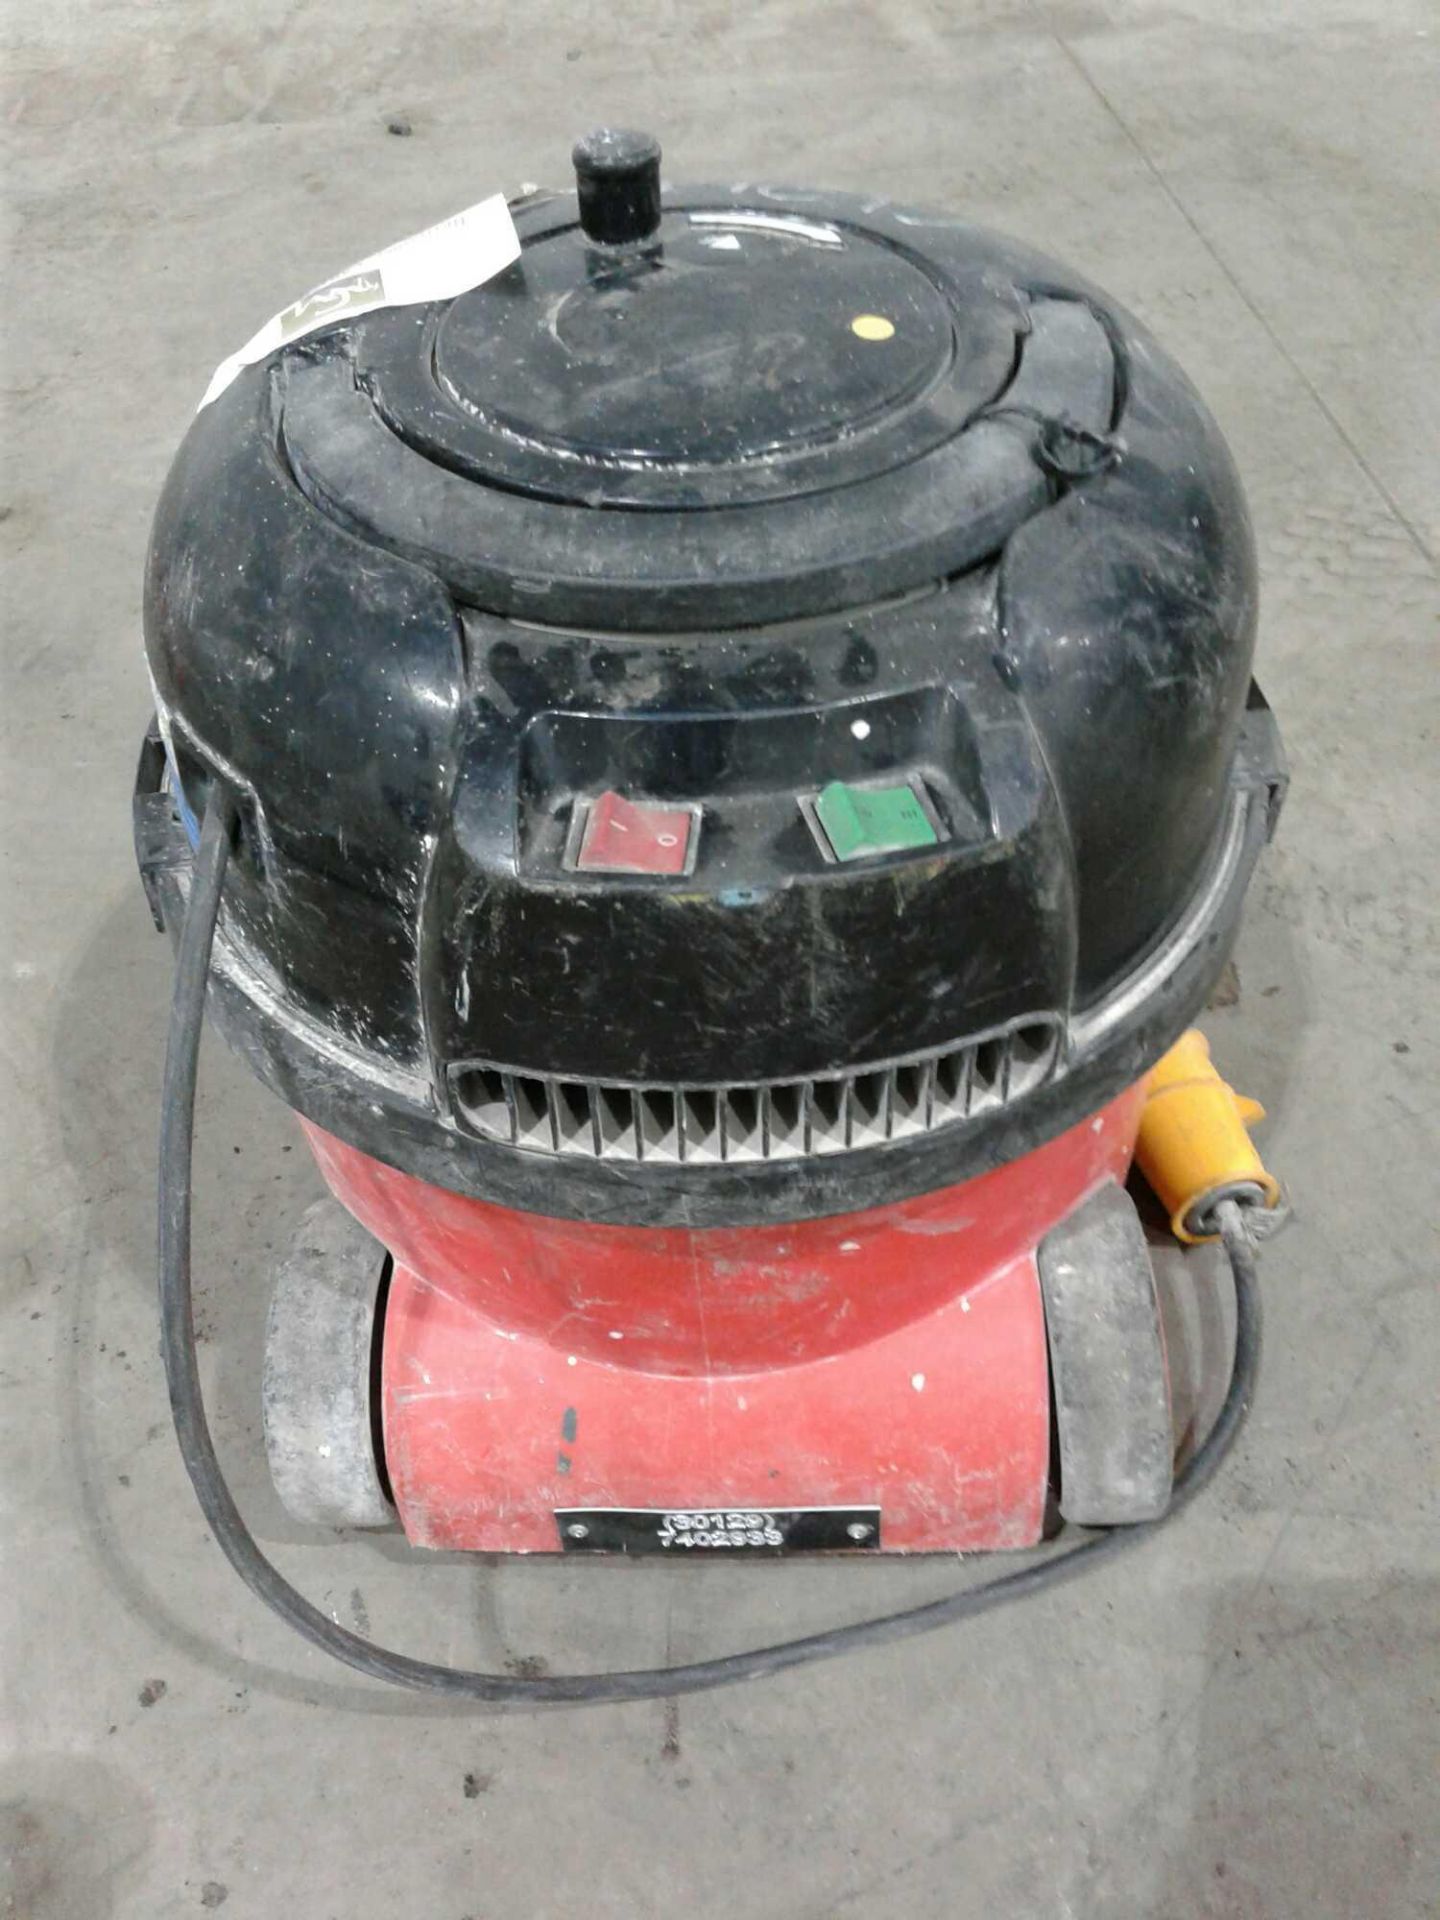 Henry Numatic vacuum cleaner 110 V - Image 2 of 2